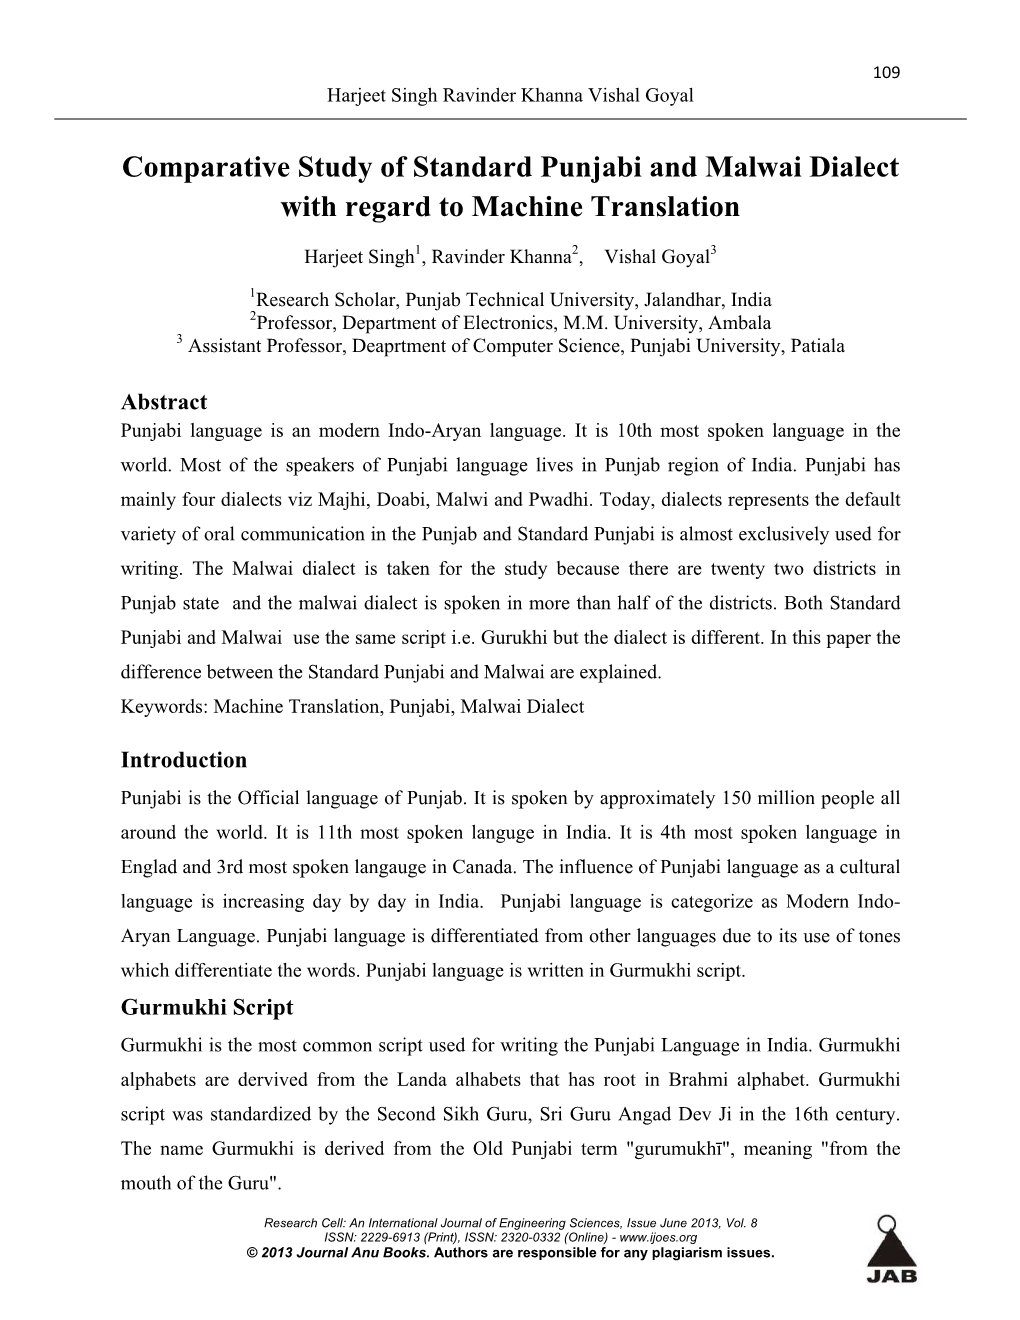 Comparative Study of Standard Punjabi and Malwai Dialect with Regard to Machine Translation